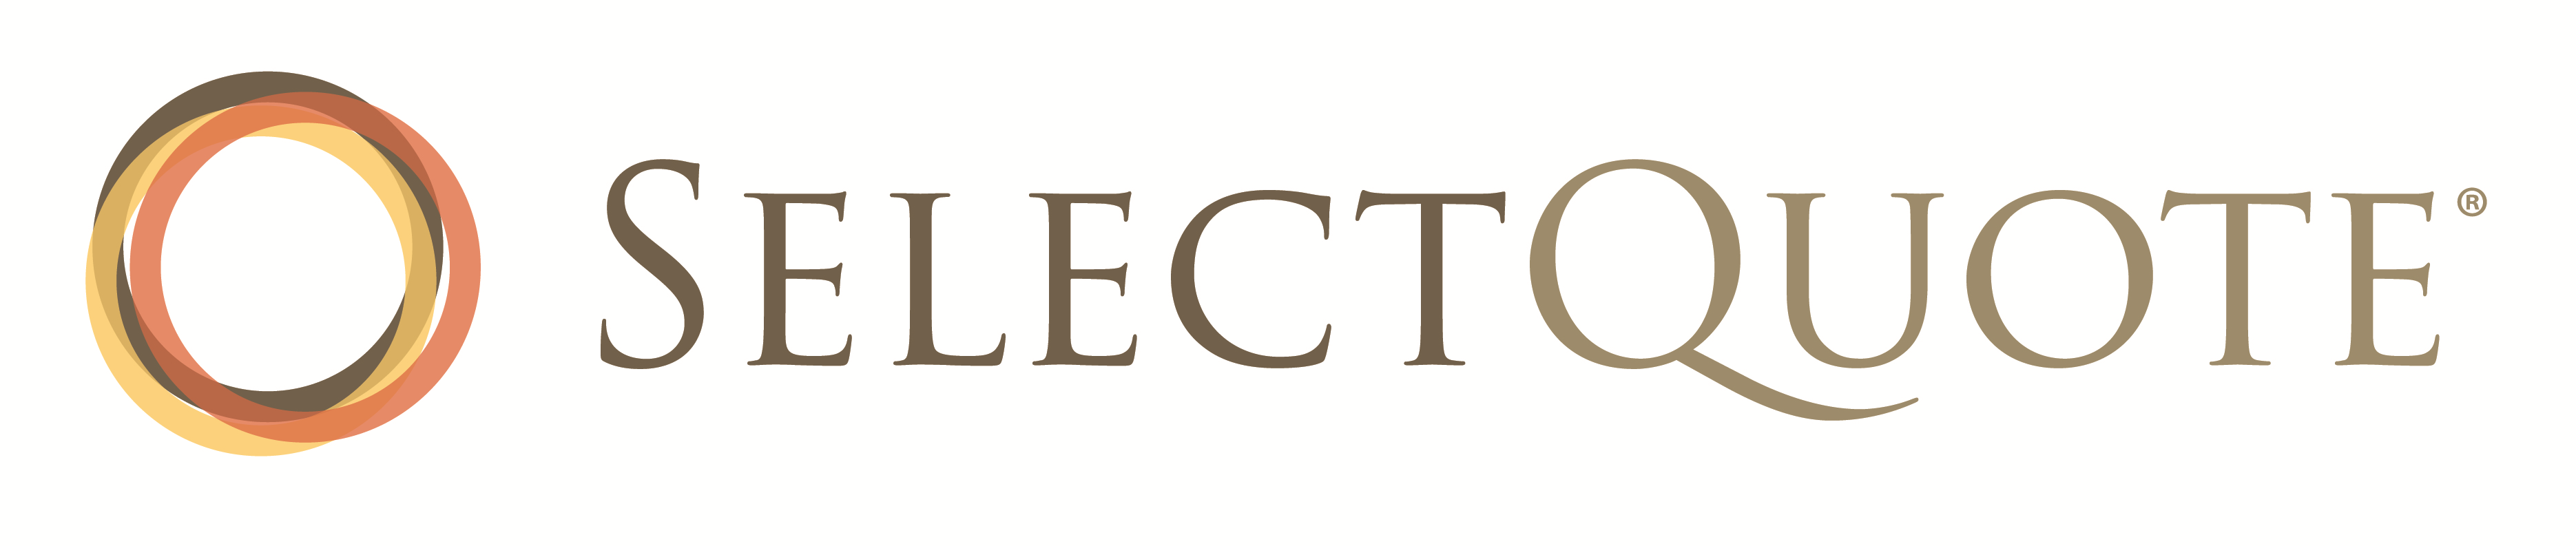 SelectQuote Insurance Services Company Logo